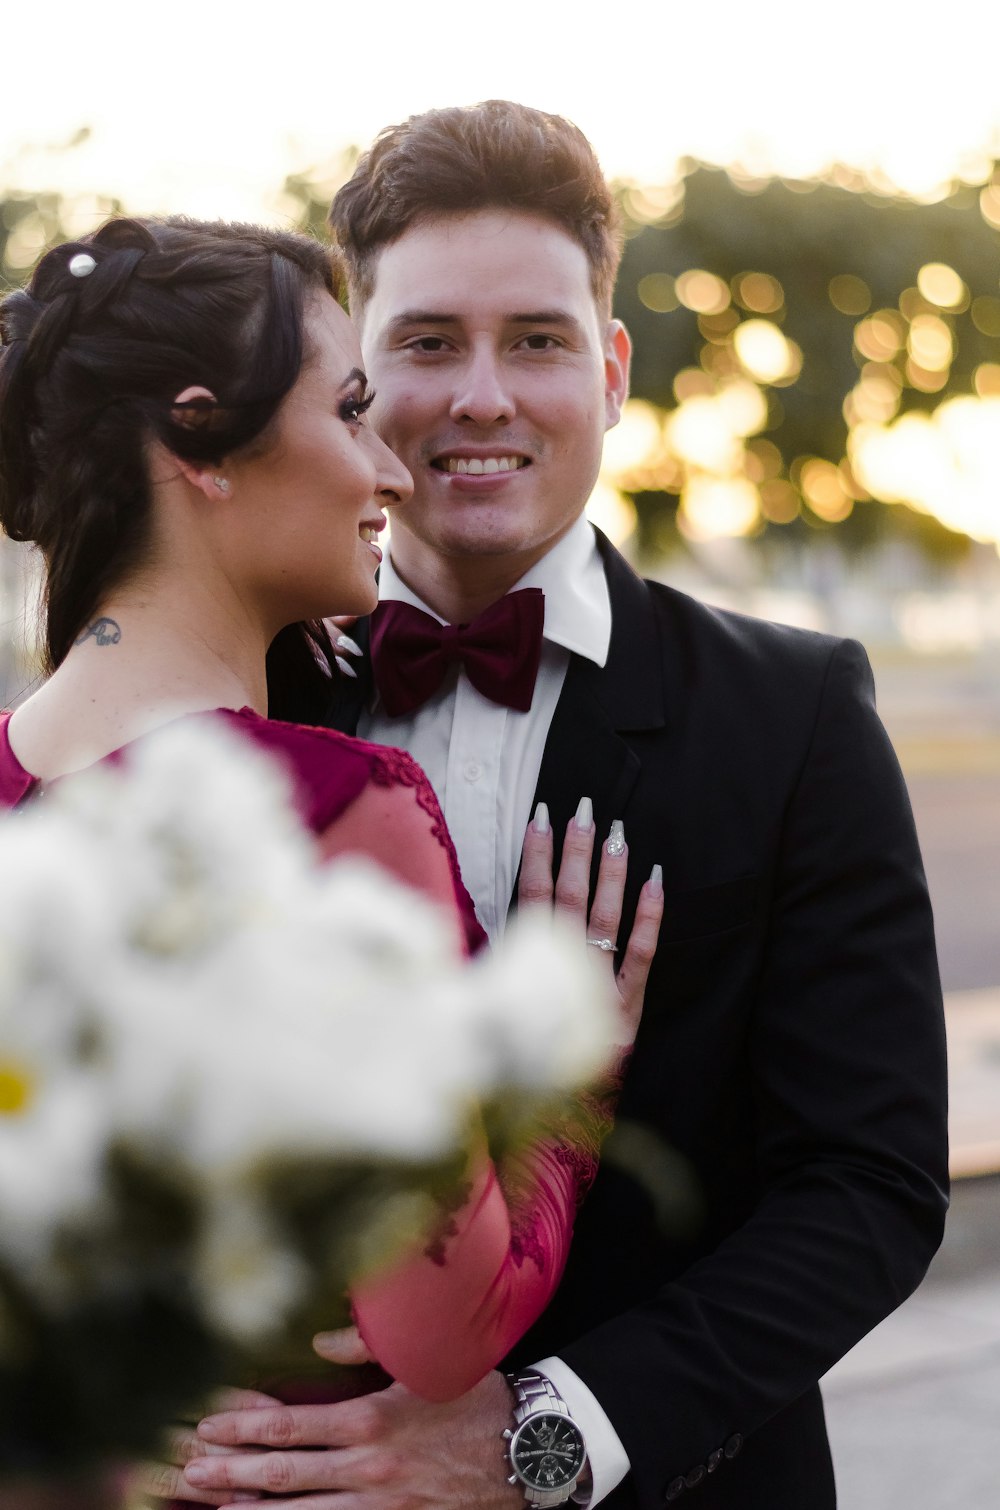 man in black suit jacket kissing woman in white wedding dress